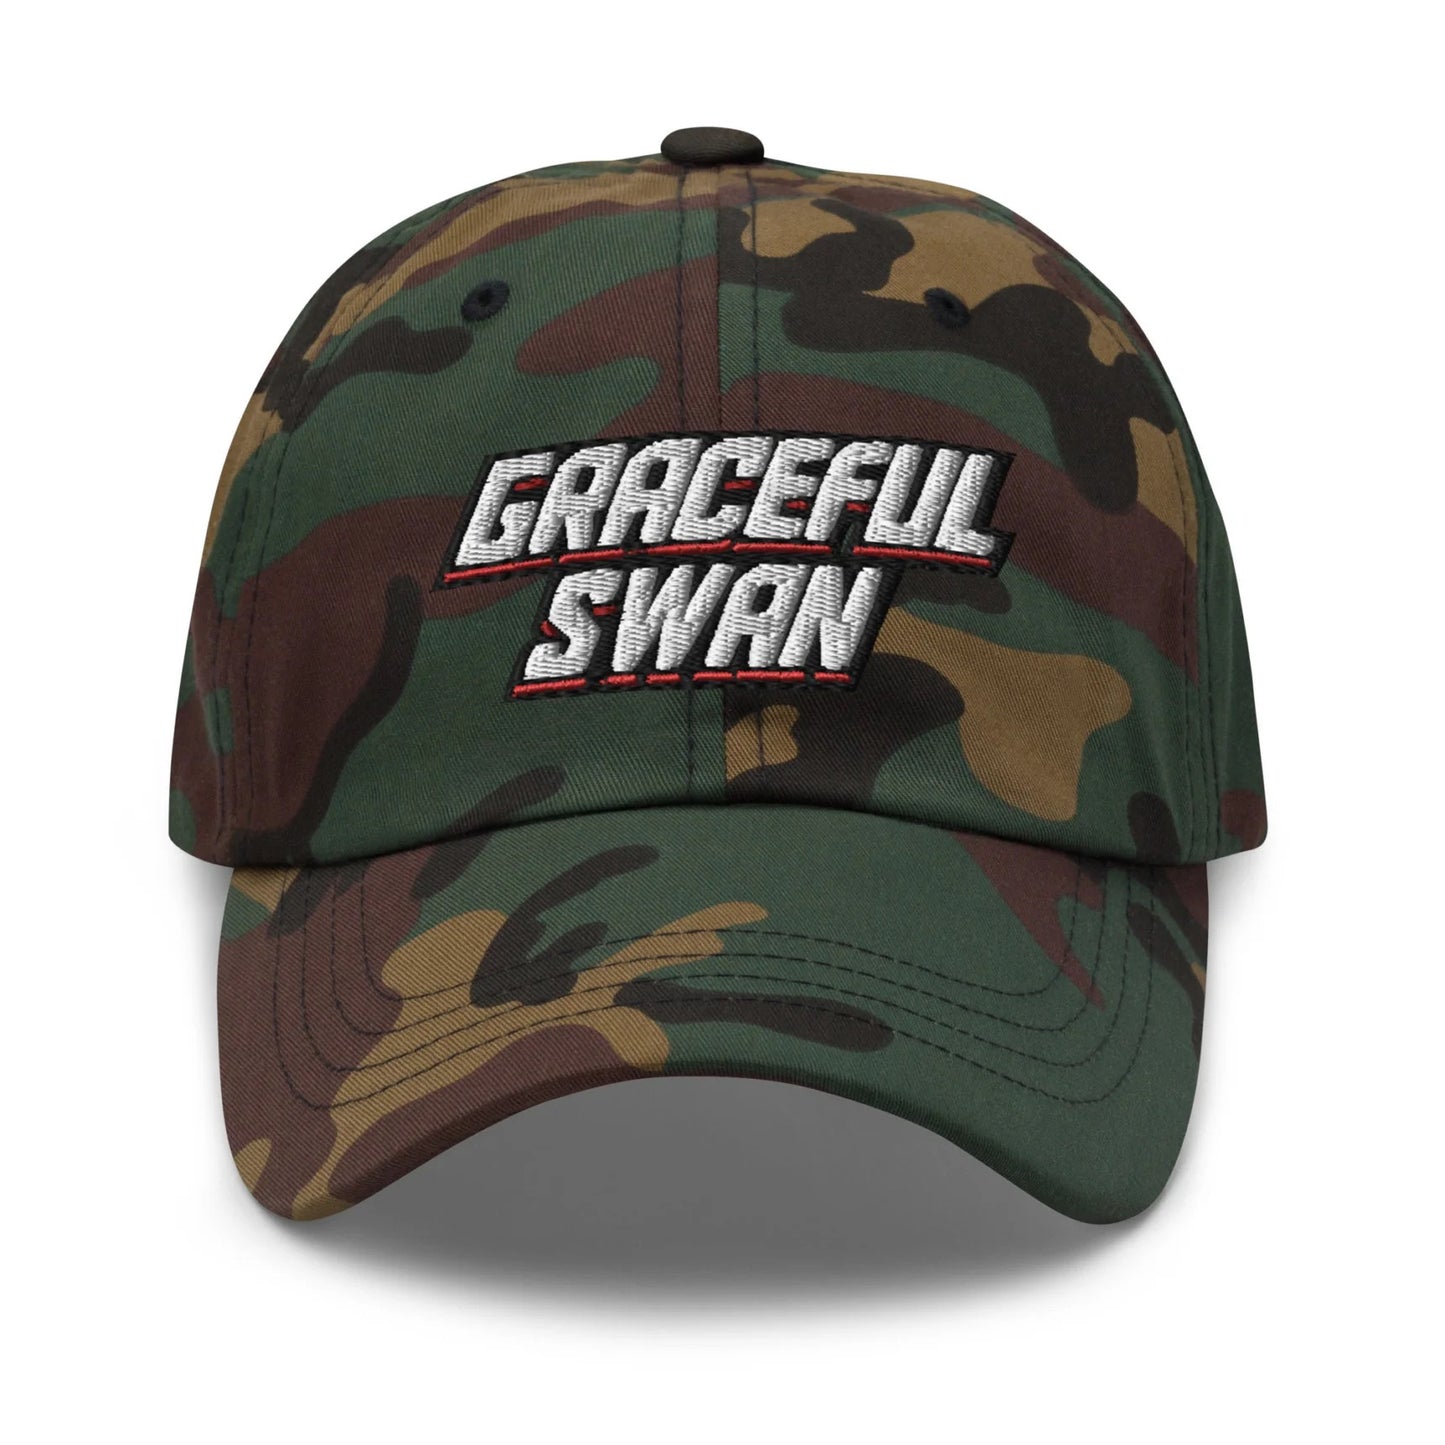 Graceful Swan ShowZone baseball dad hat in camouflage print